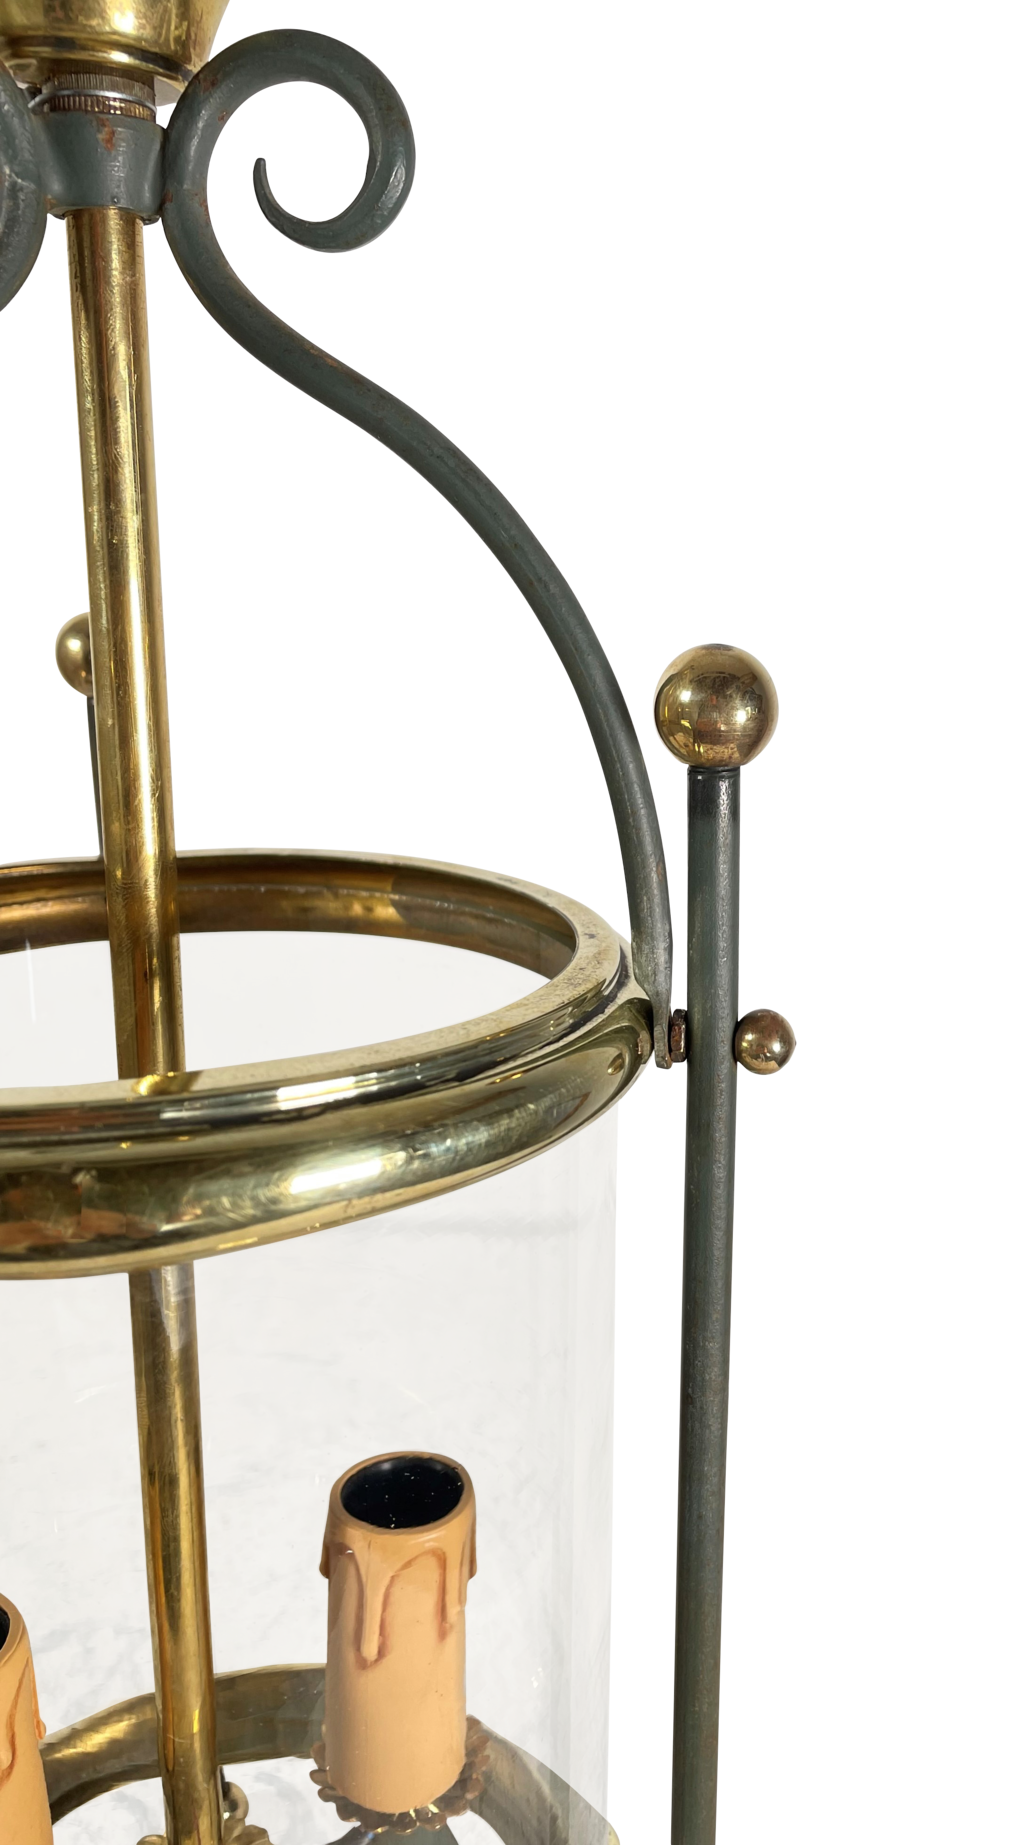 Round Brass and Glass Lantern